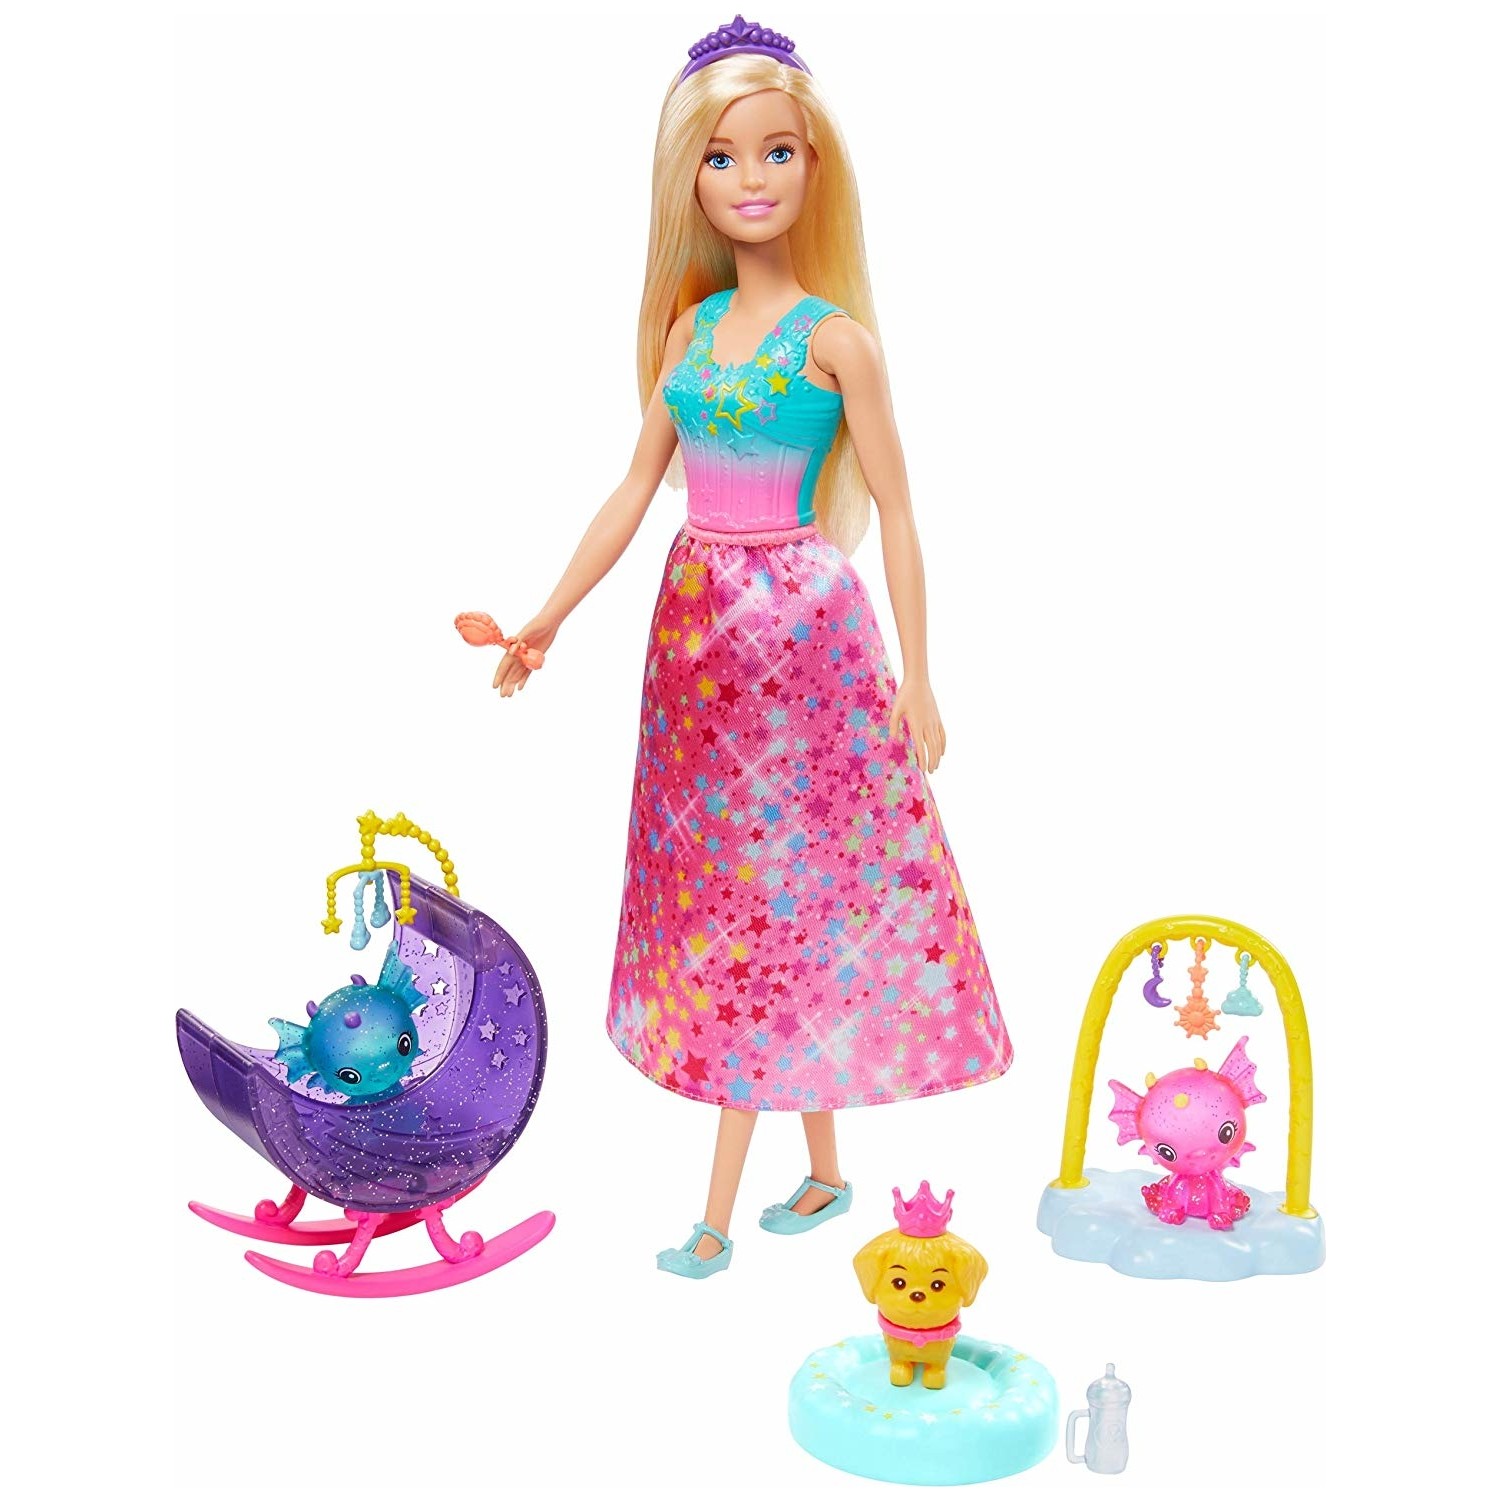 Кукла Barbie Dreamtopia Princess Doll and Accessories GJK51 кукла barbie dreamtopia princess fjc95